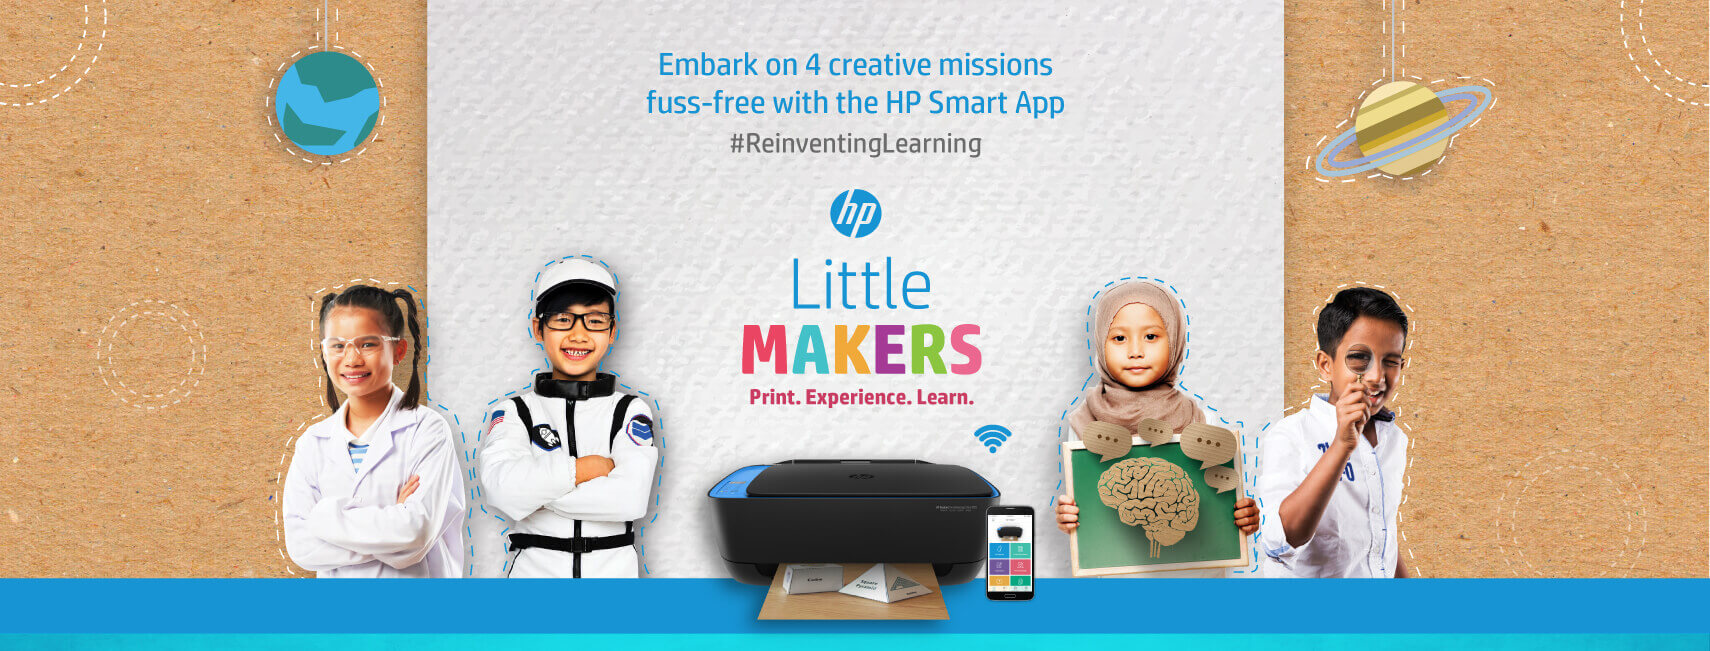 HP Little Makers Challenge. A challenge to print activities.